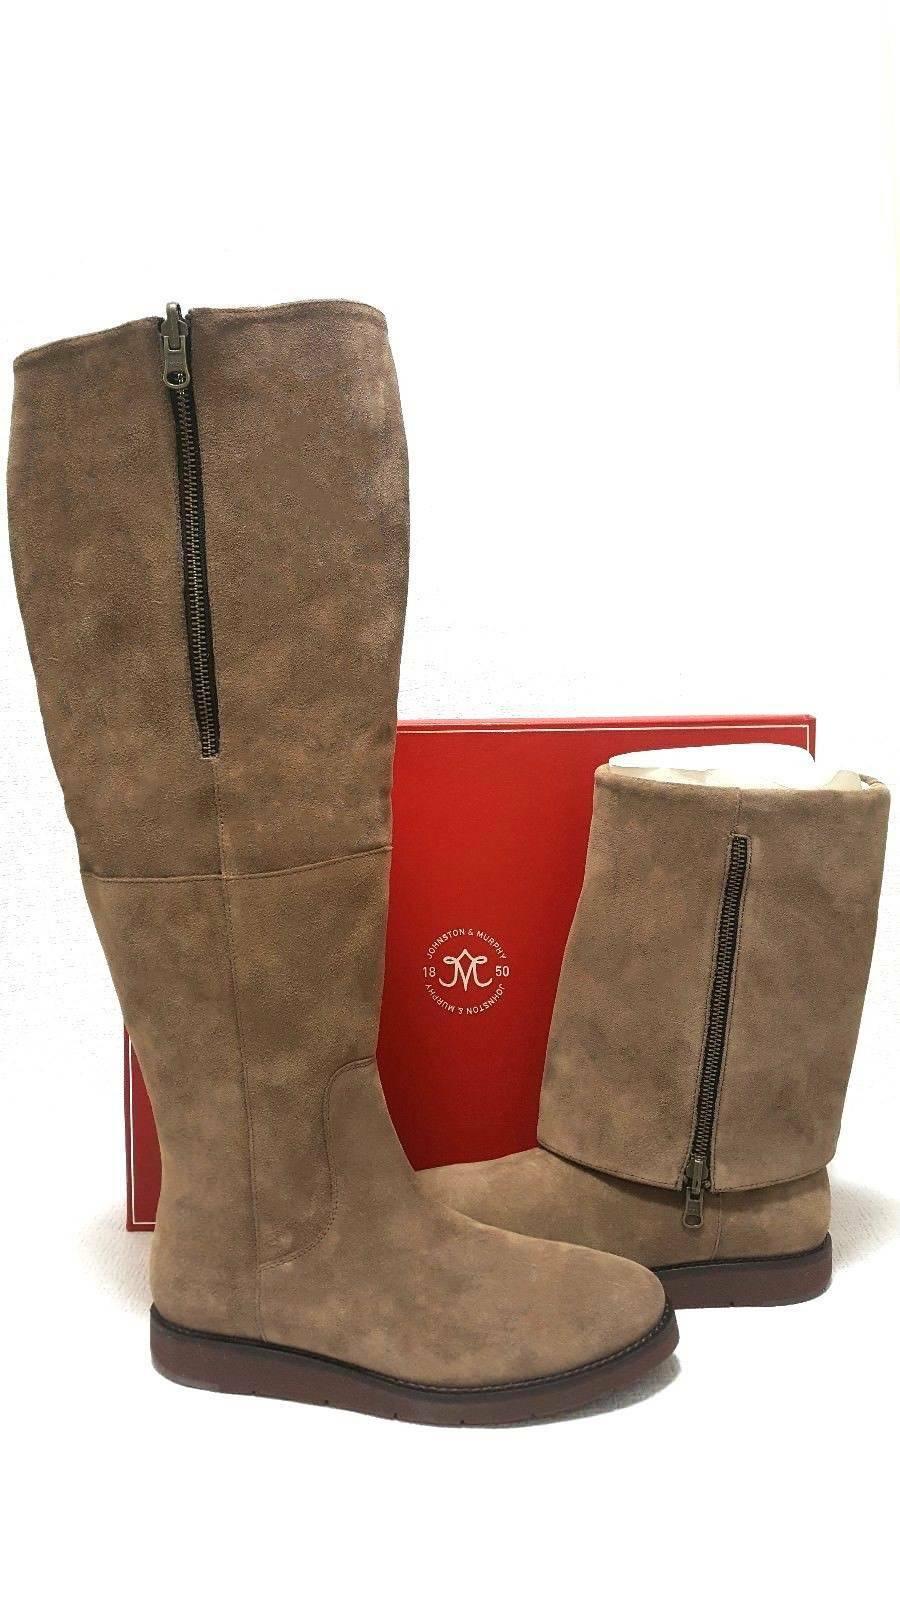 Johnston & Murphy Bree Women Cuffed Knee High Boots Stony Waxy Suede US 7 NEW - SVNYFancy